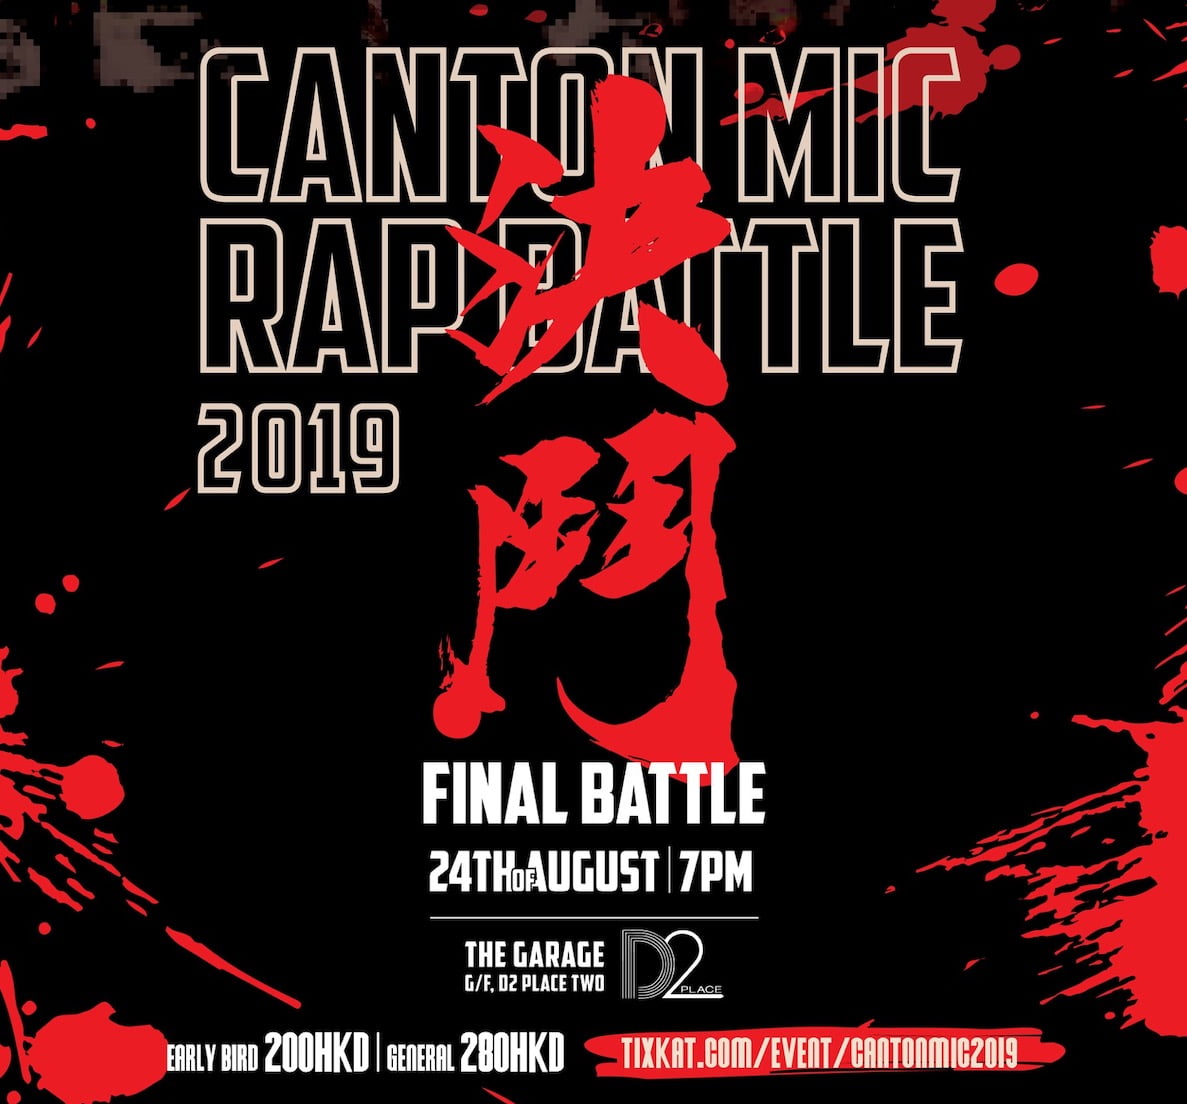 Canton Mic Rap Battle 2019